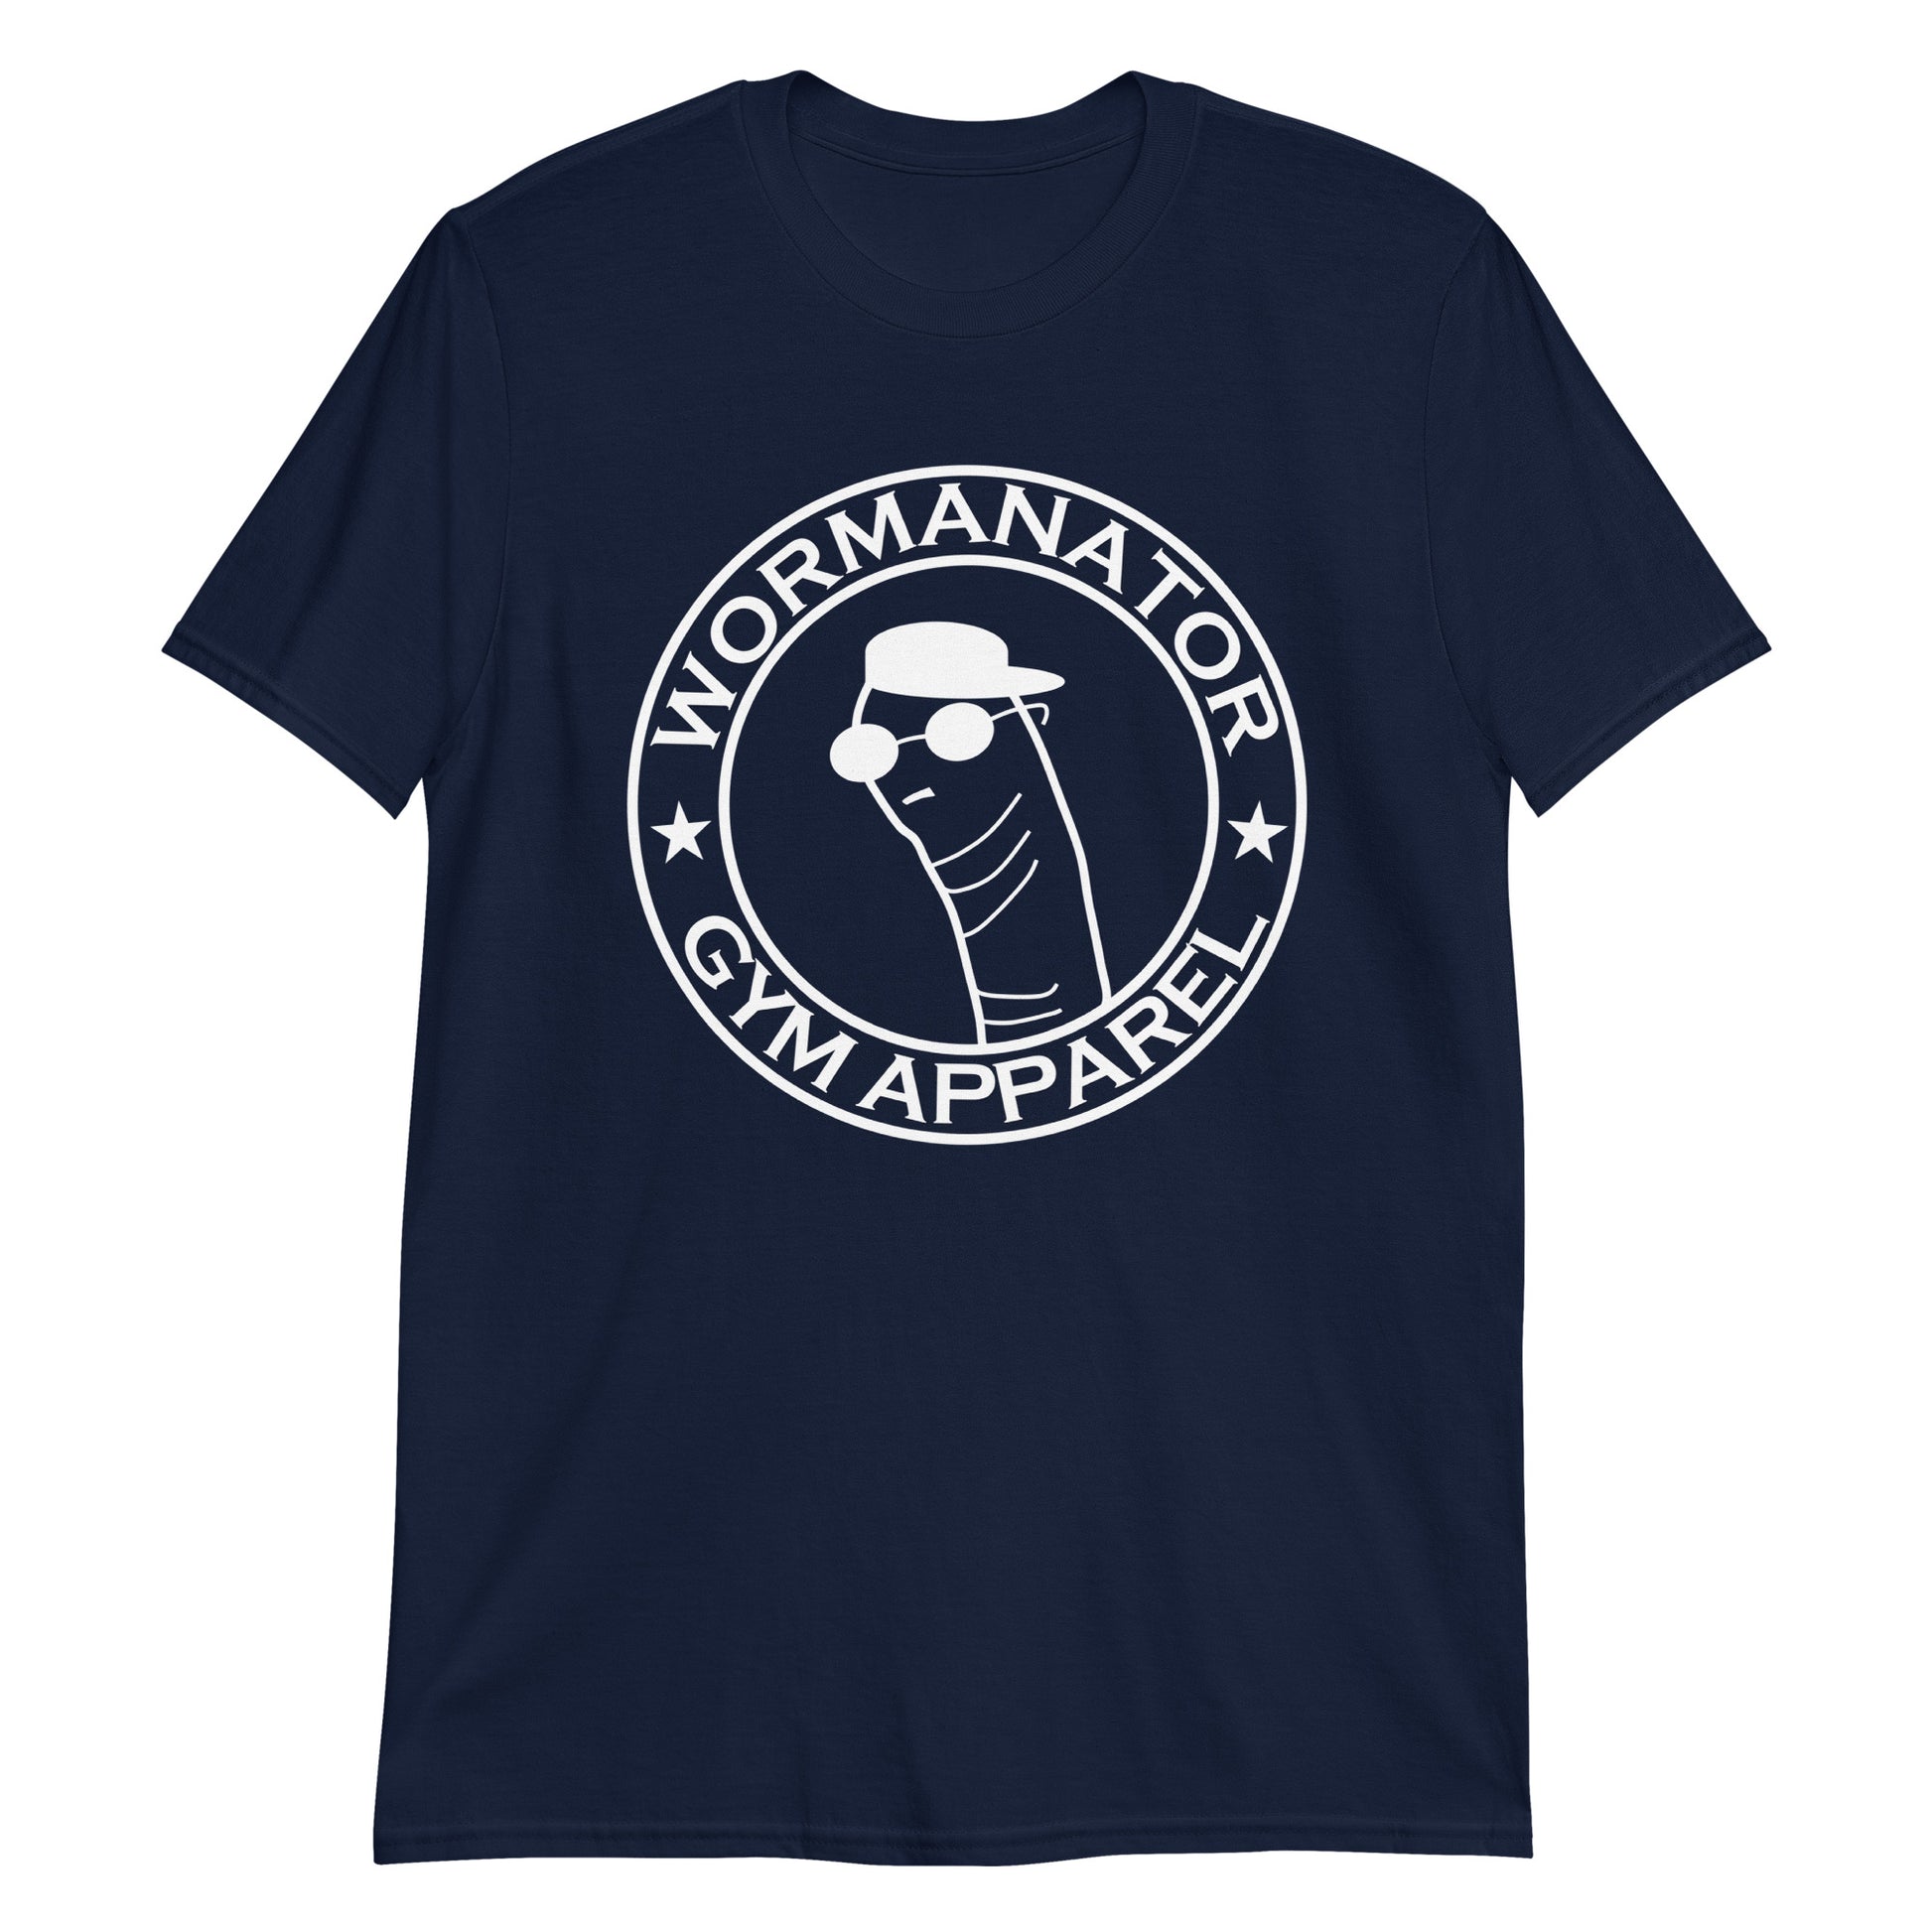 Wormanator Gym Apparel "Worm Logo" Shirt in Navy